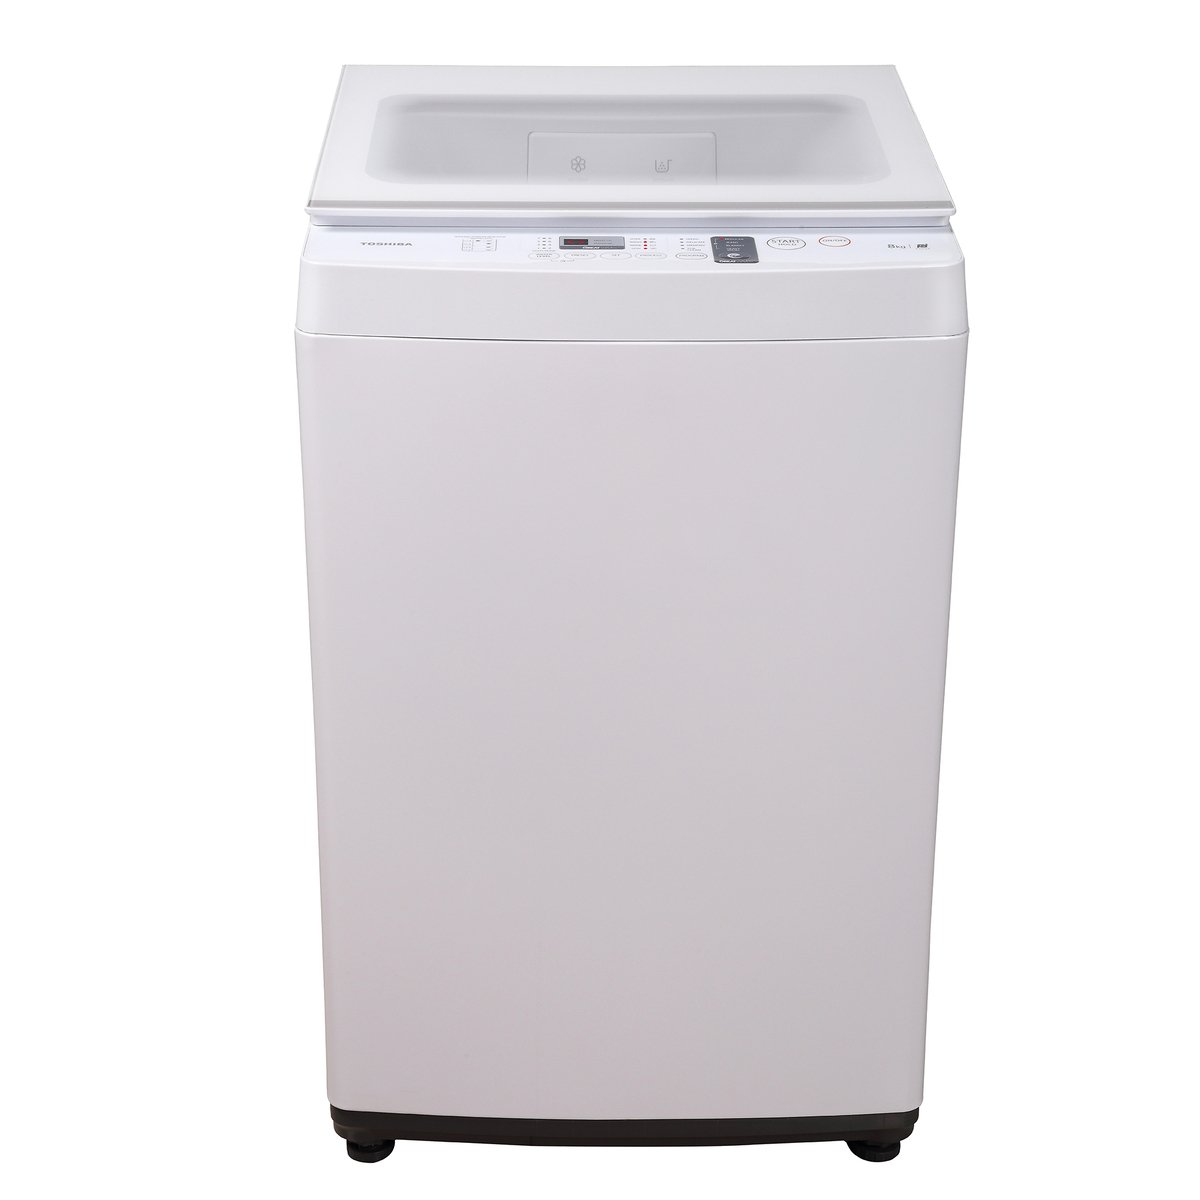 Toshiba Top Load Washing Machine,7 kg, White, AW-J800DUPA